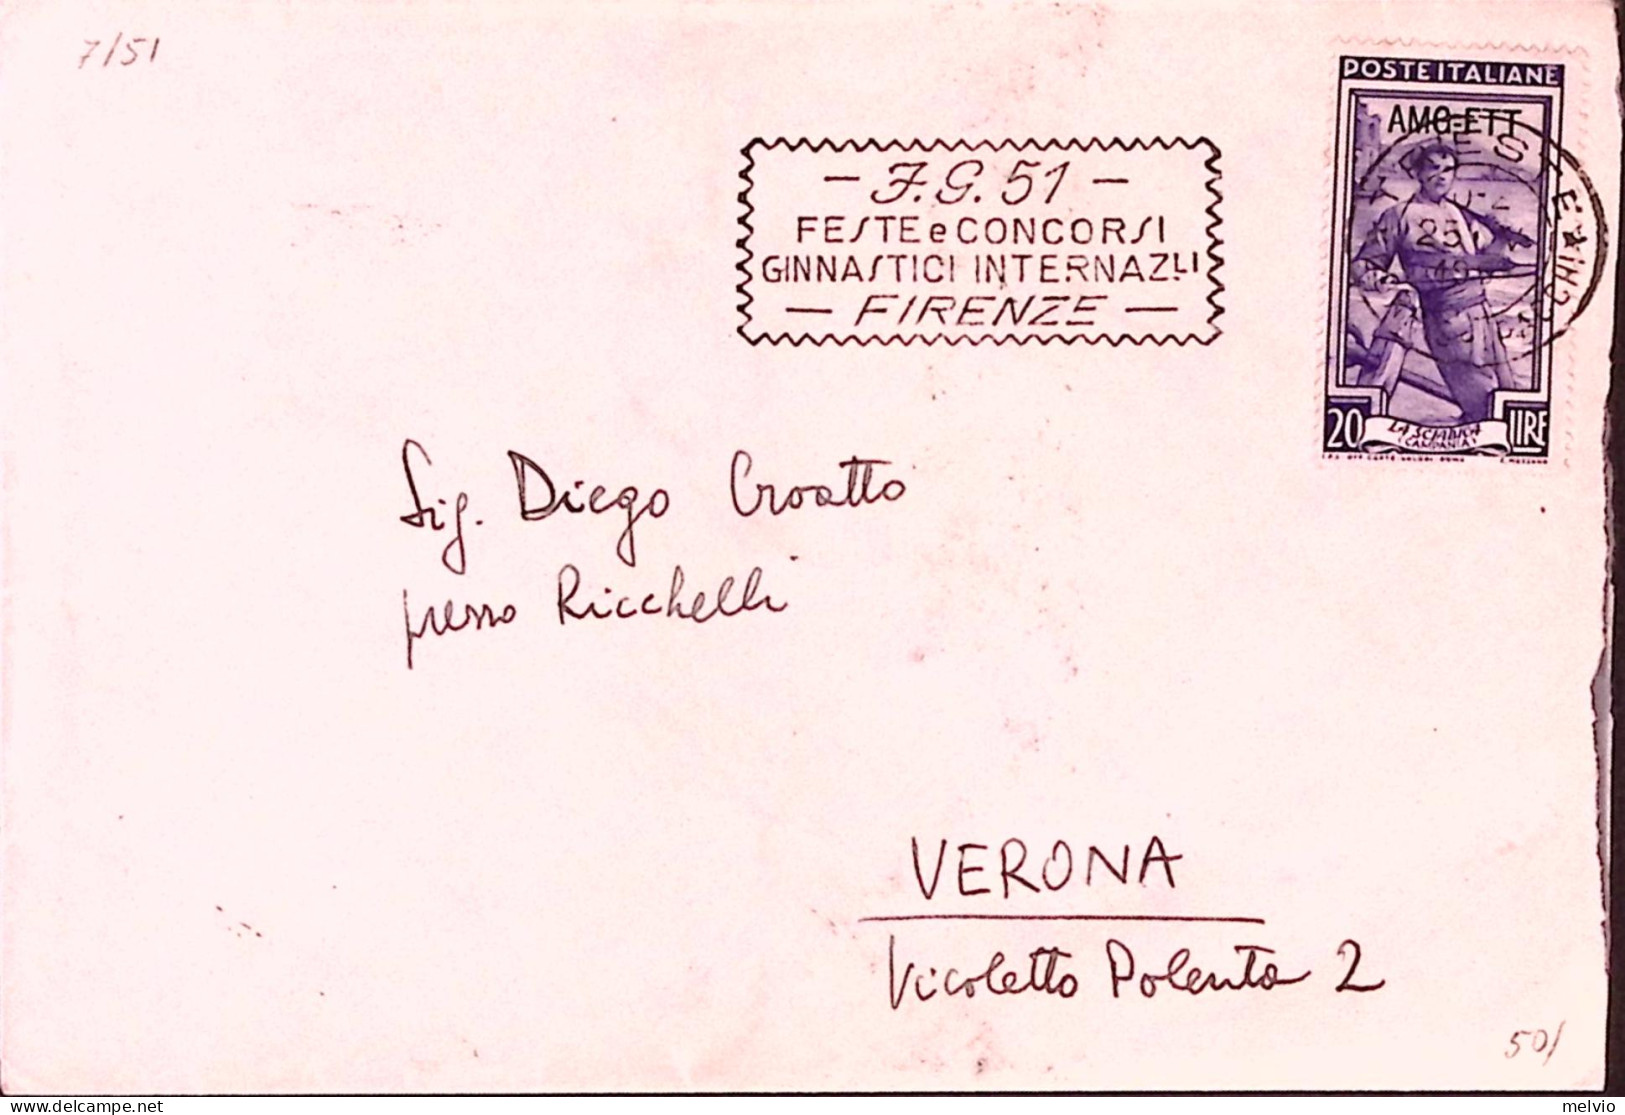 1951-AMG-FTT Targhetta CONCORSI GINNICI INTERN FIRENZE (25.4) - Storia Postale